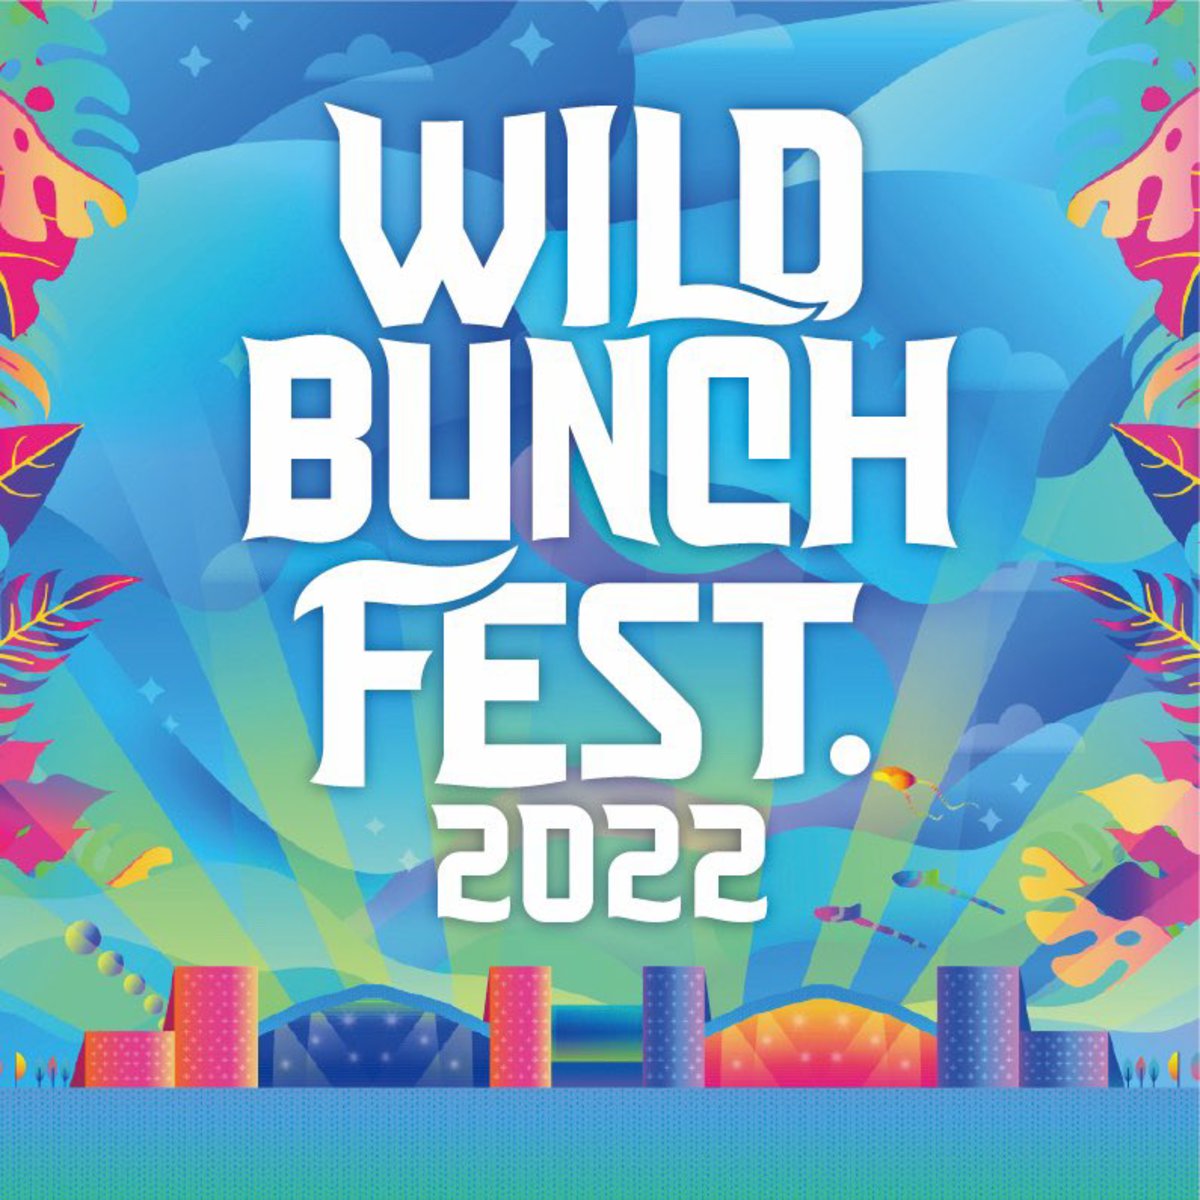 WILD FEST ワイバン 3日目チケット - 音楽フェス